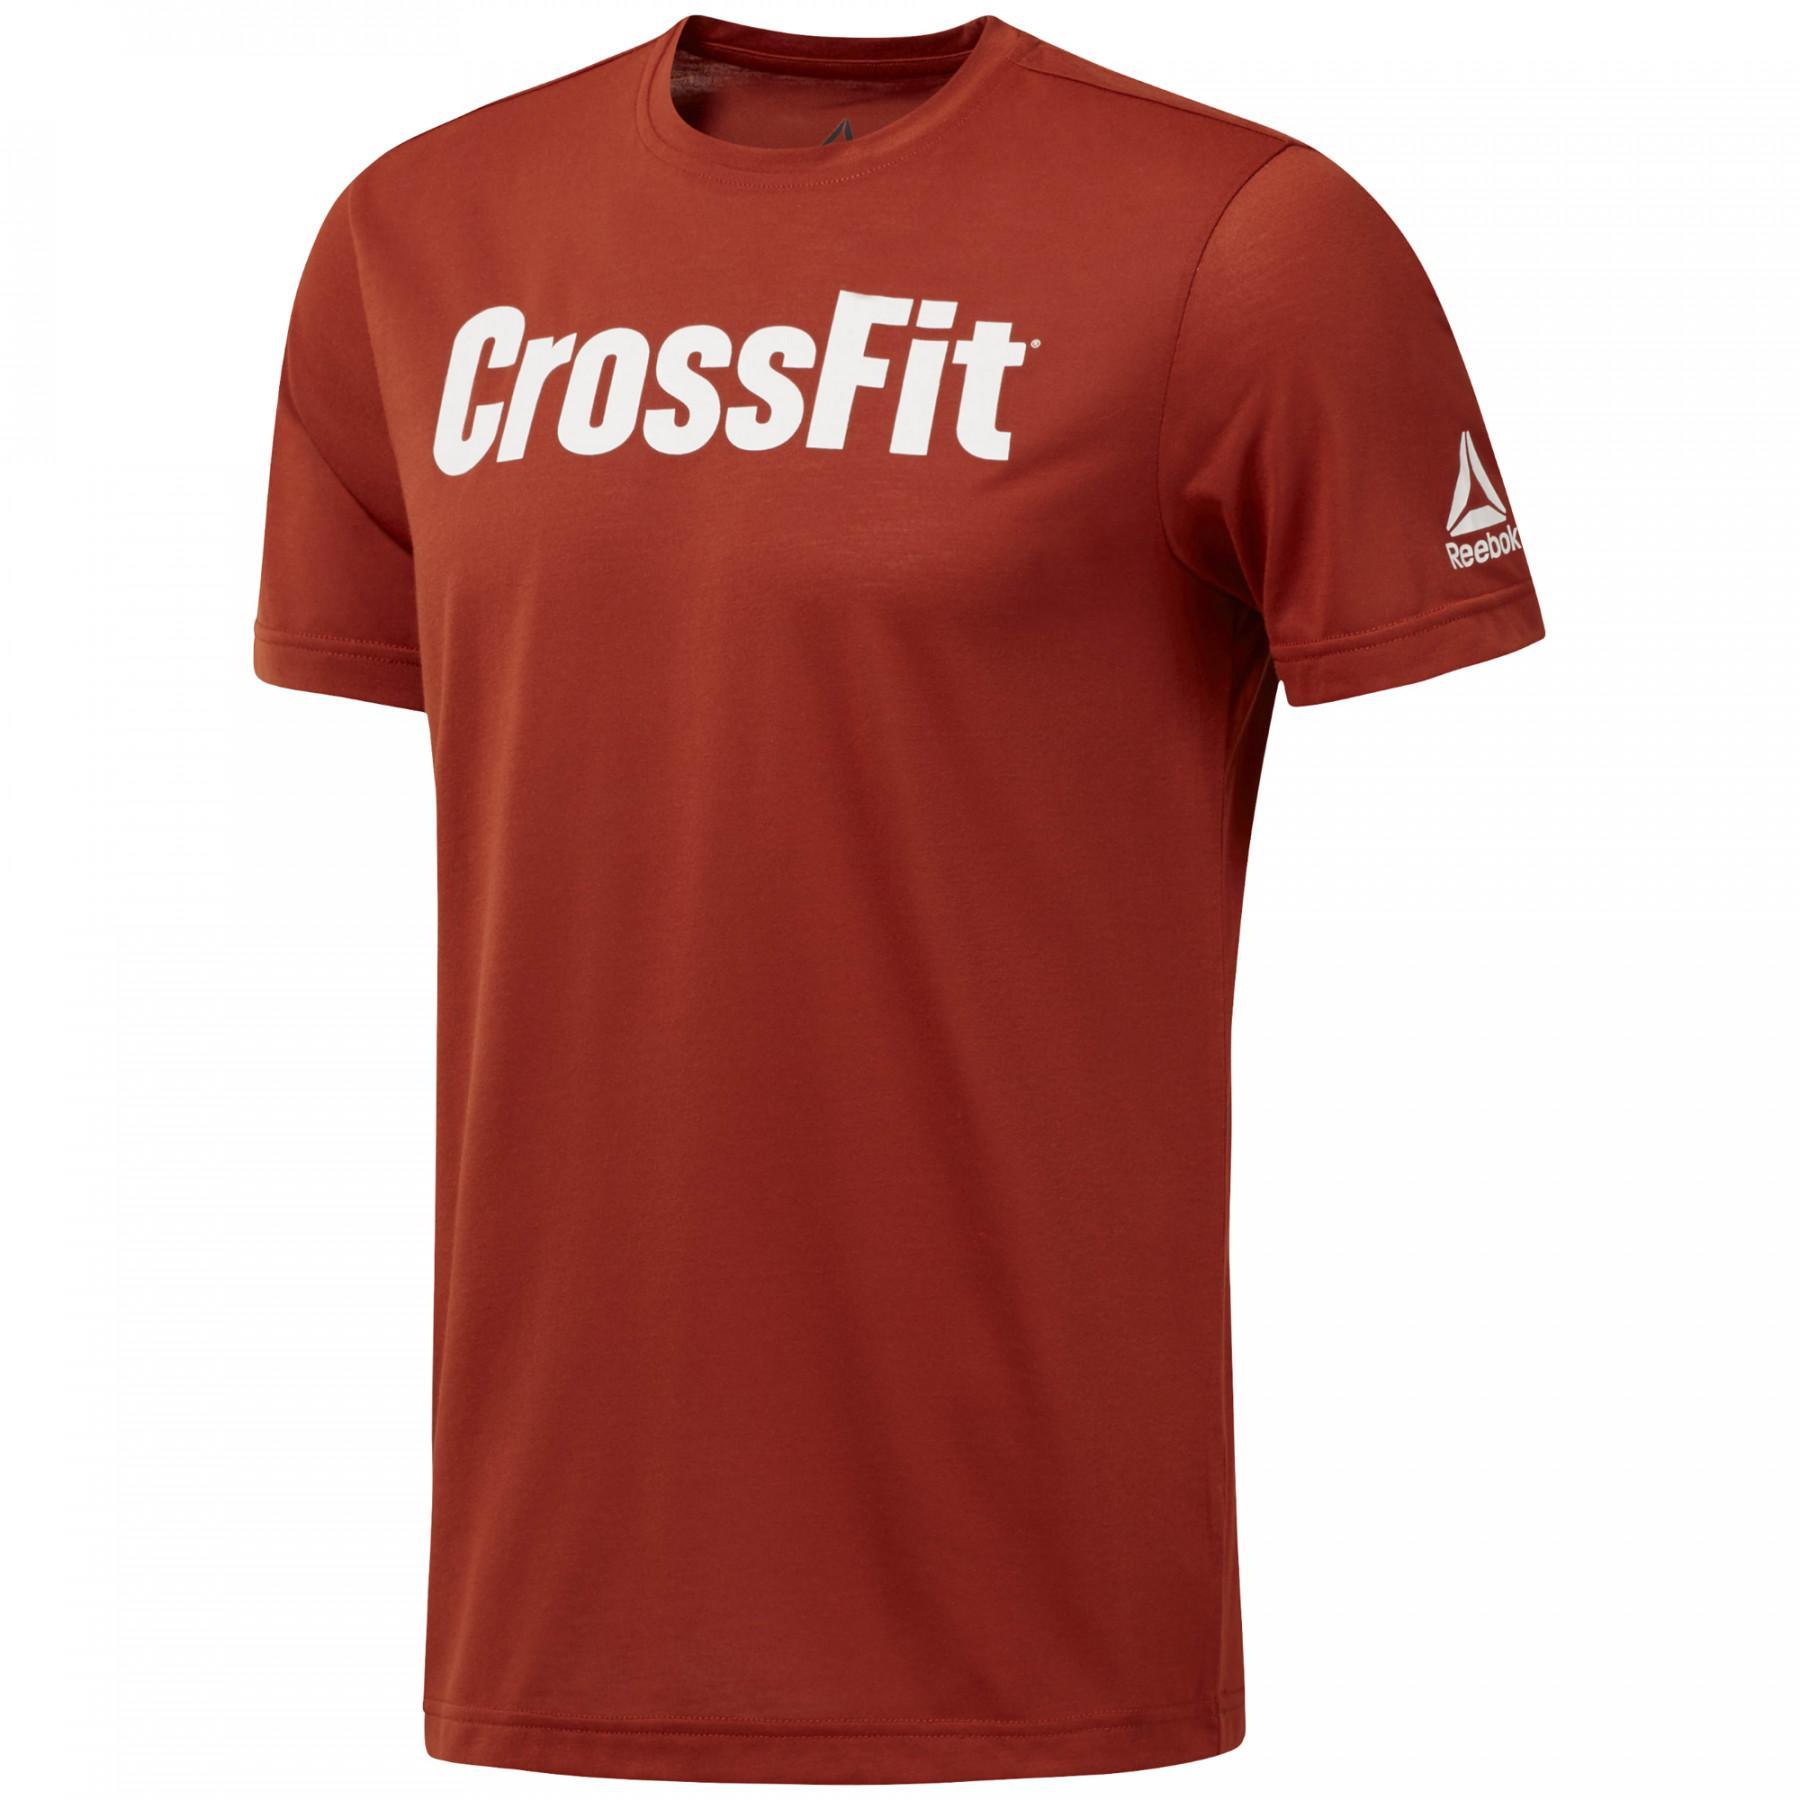 Koszulka Reebok Crossfit Forging Elite Fitness